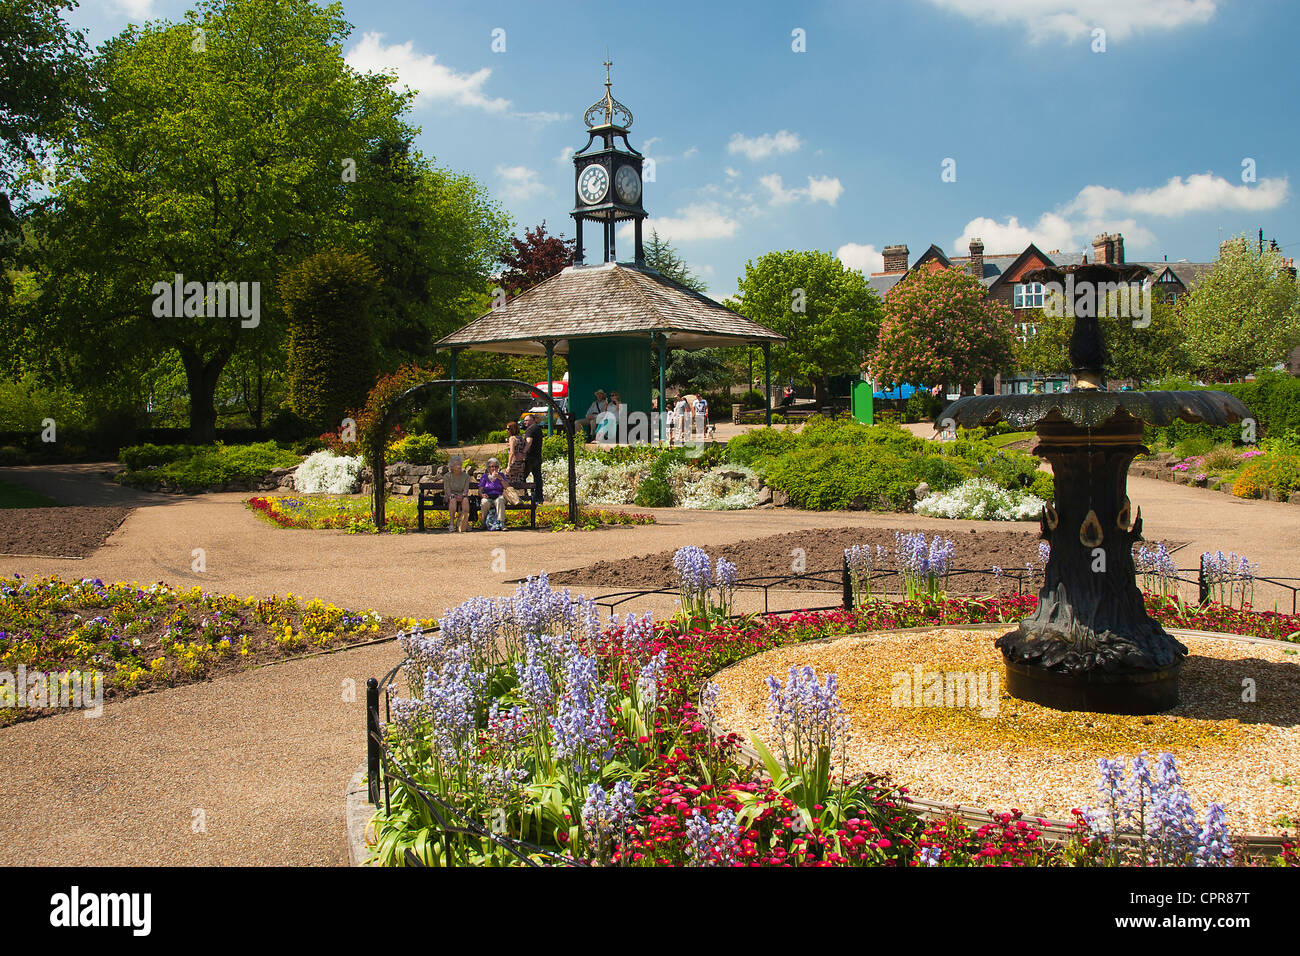 Hall Leys Park, Matlock, Derbyshire, England, UK Stock Photo